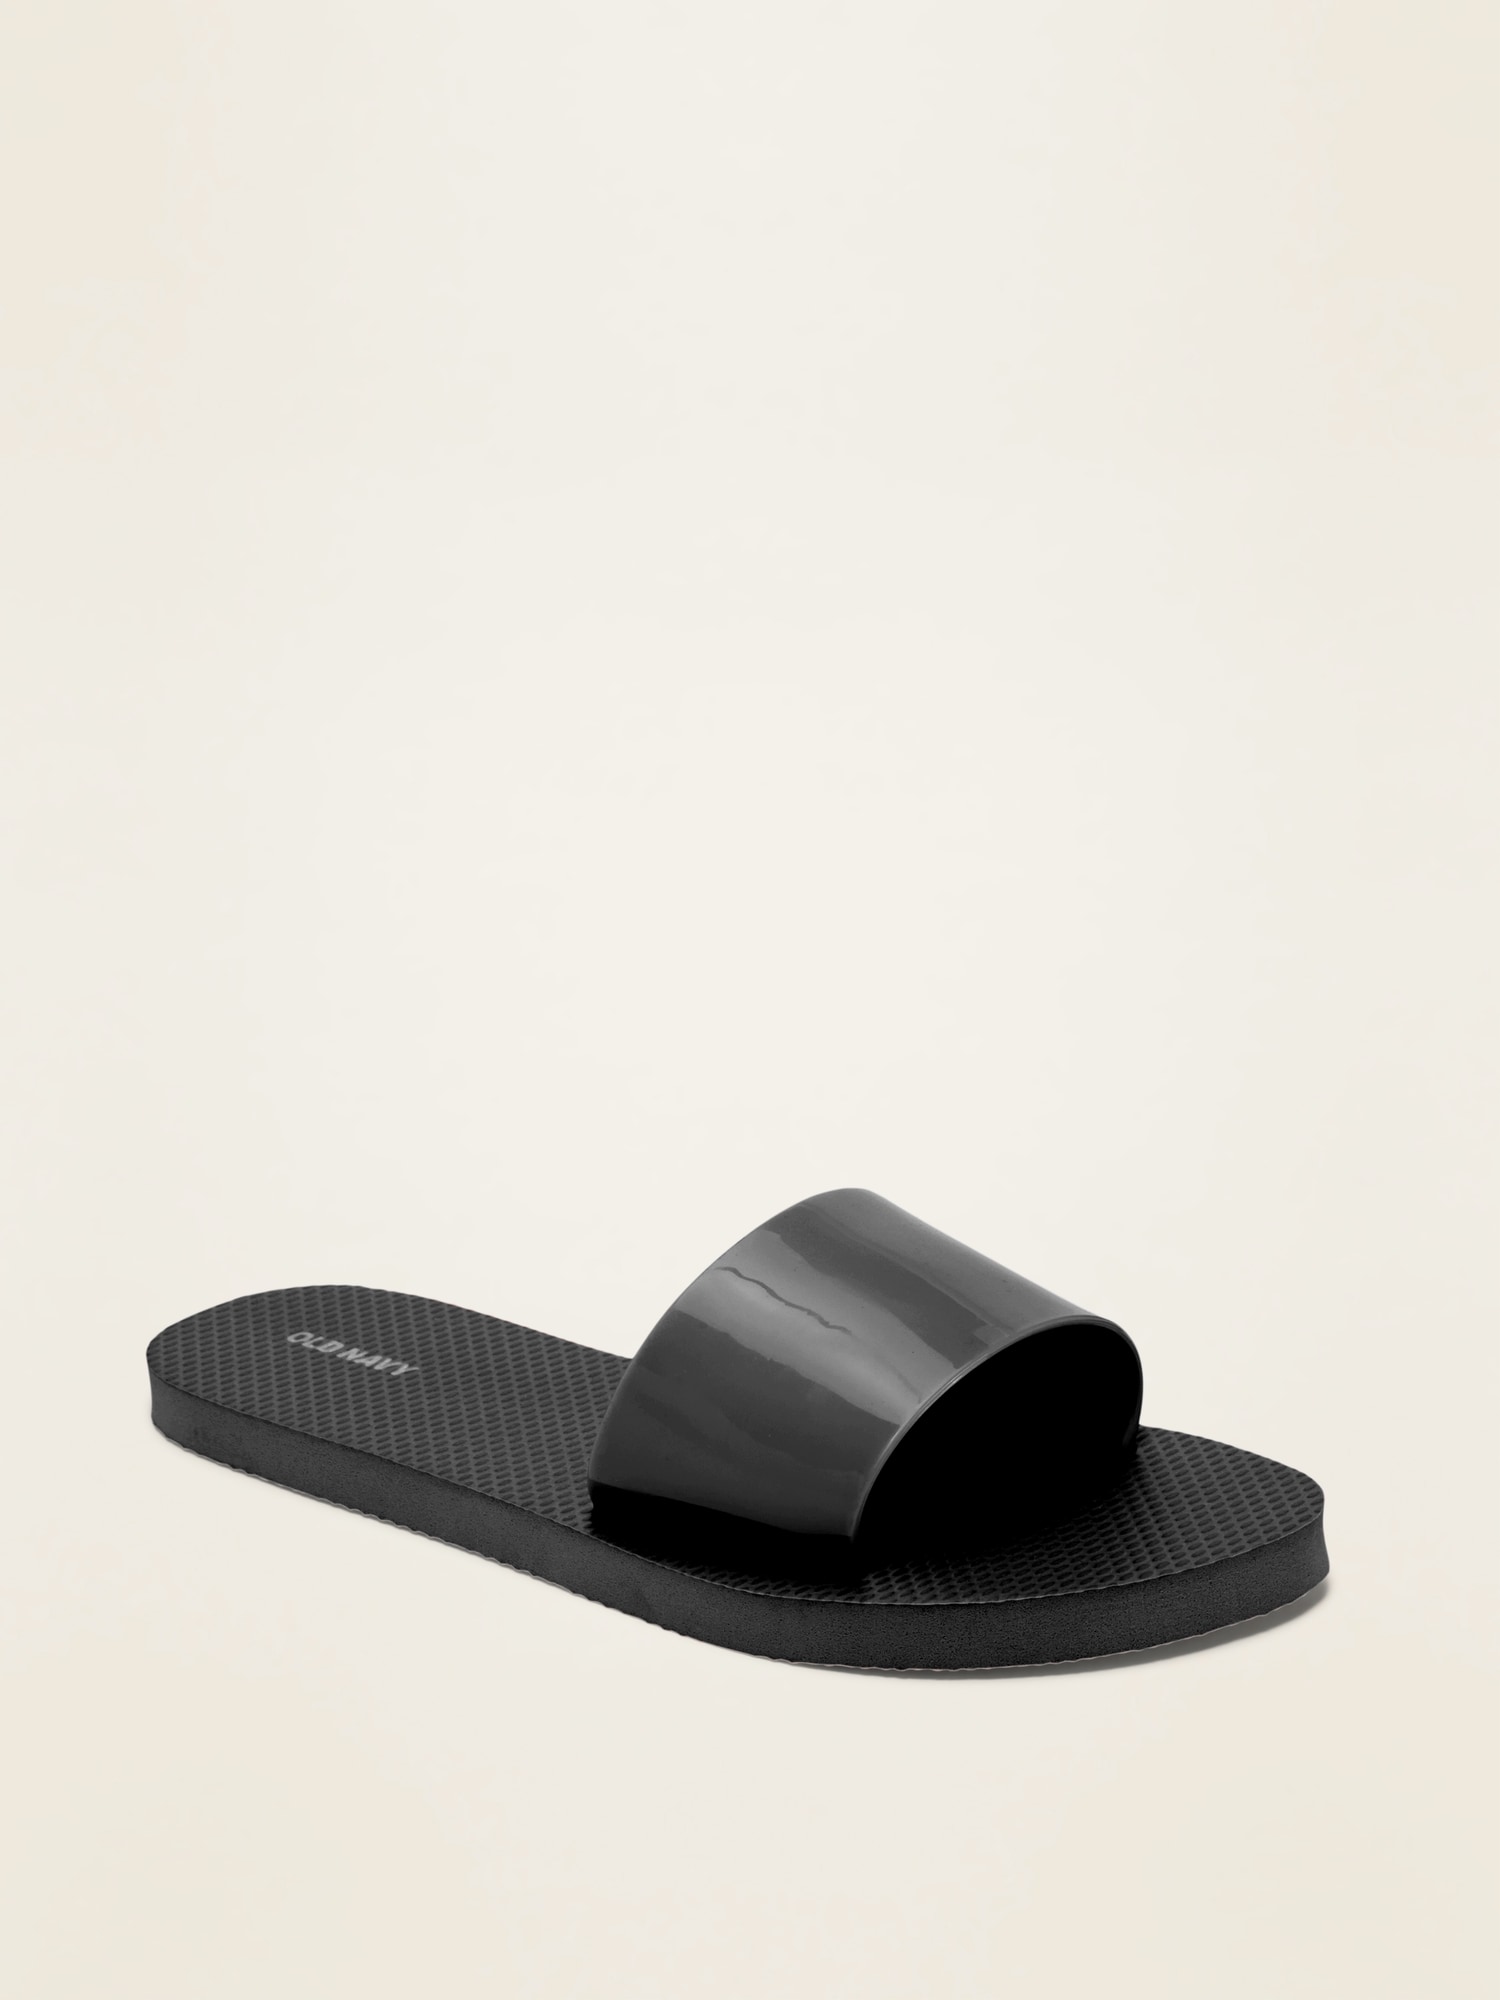 jelly flip flop sandals